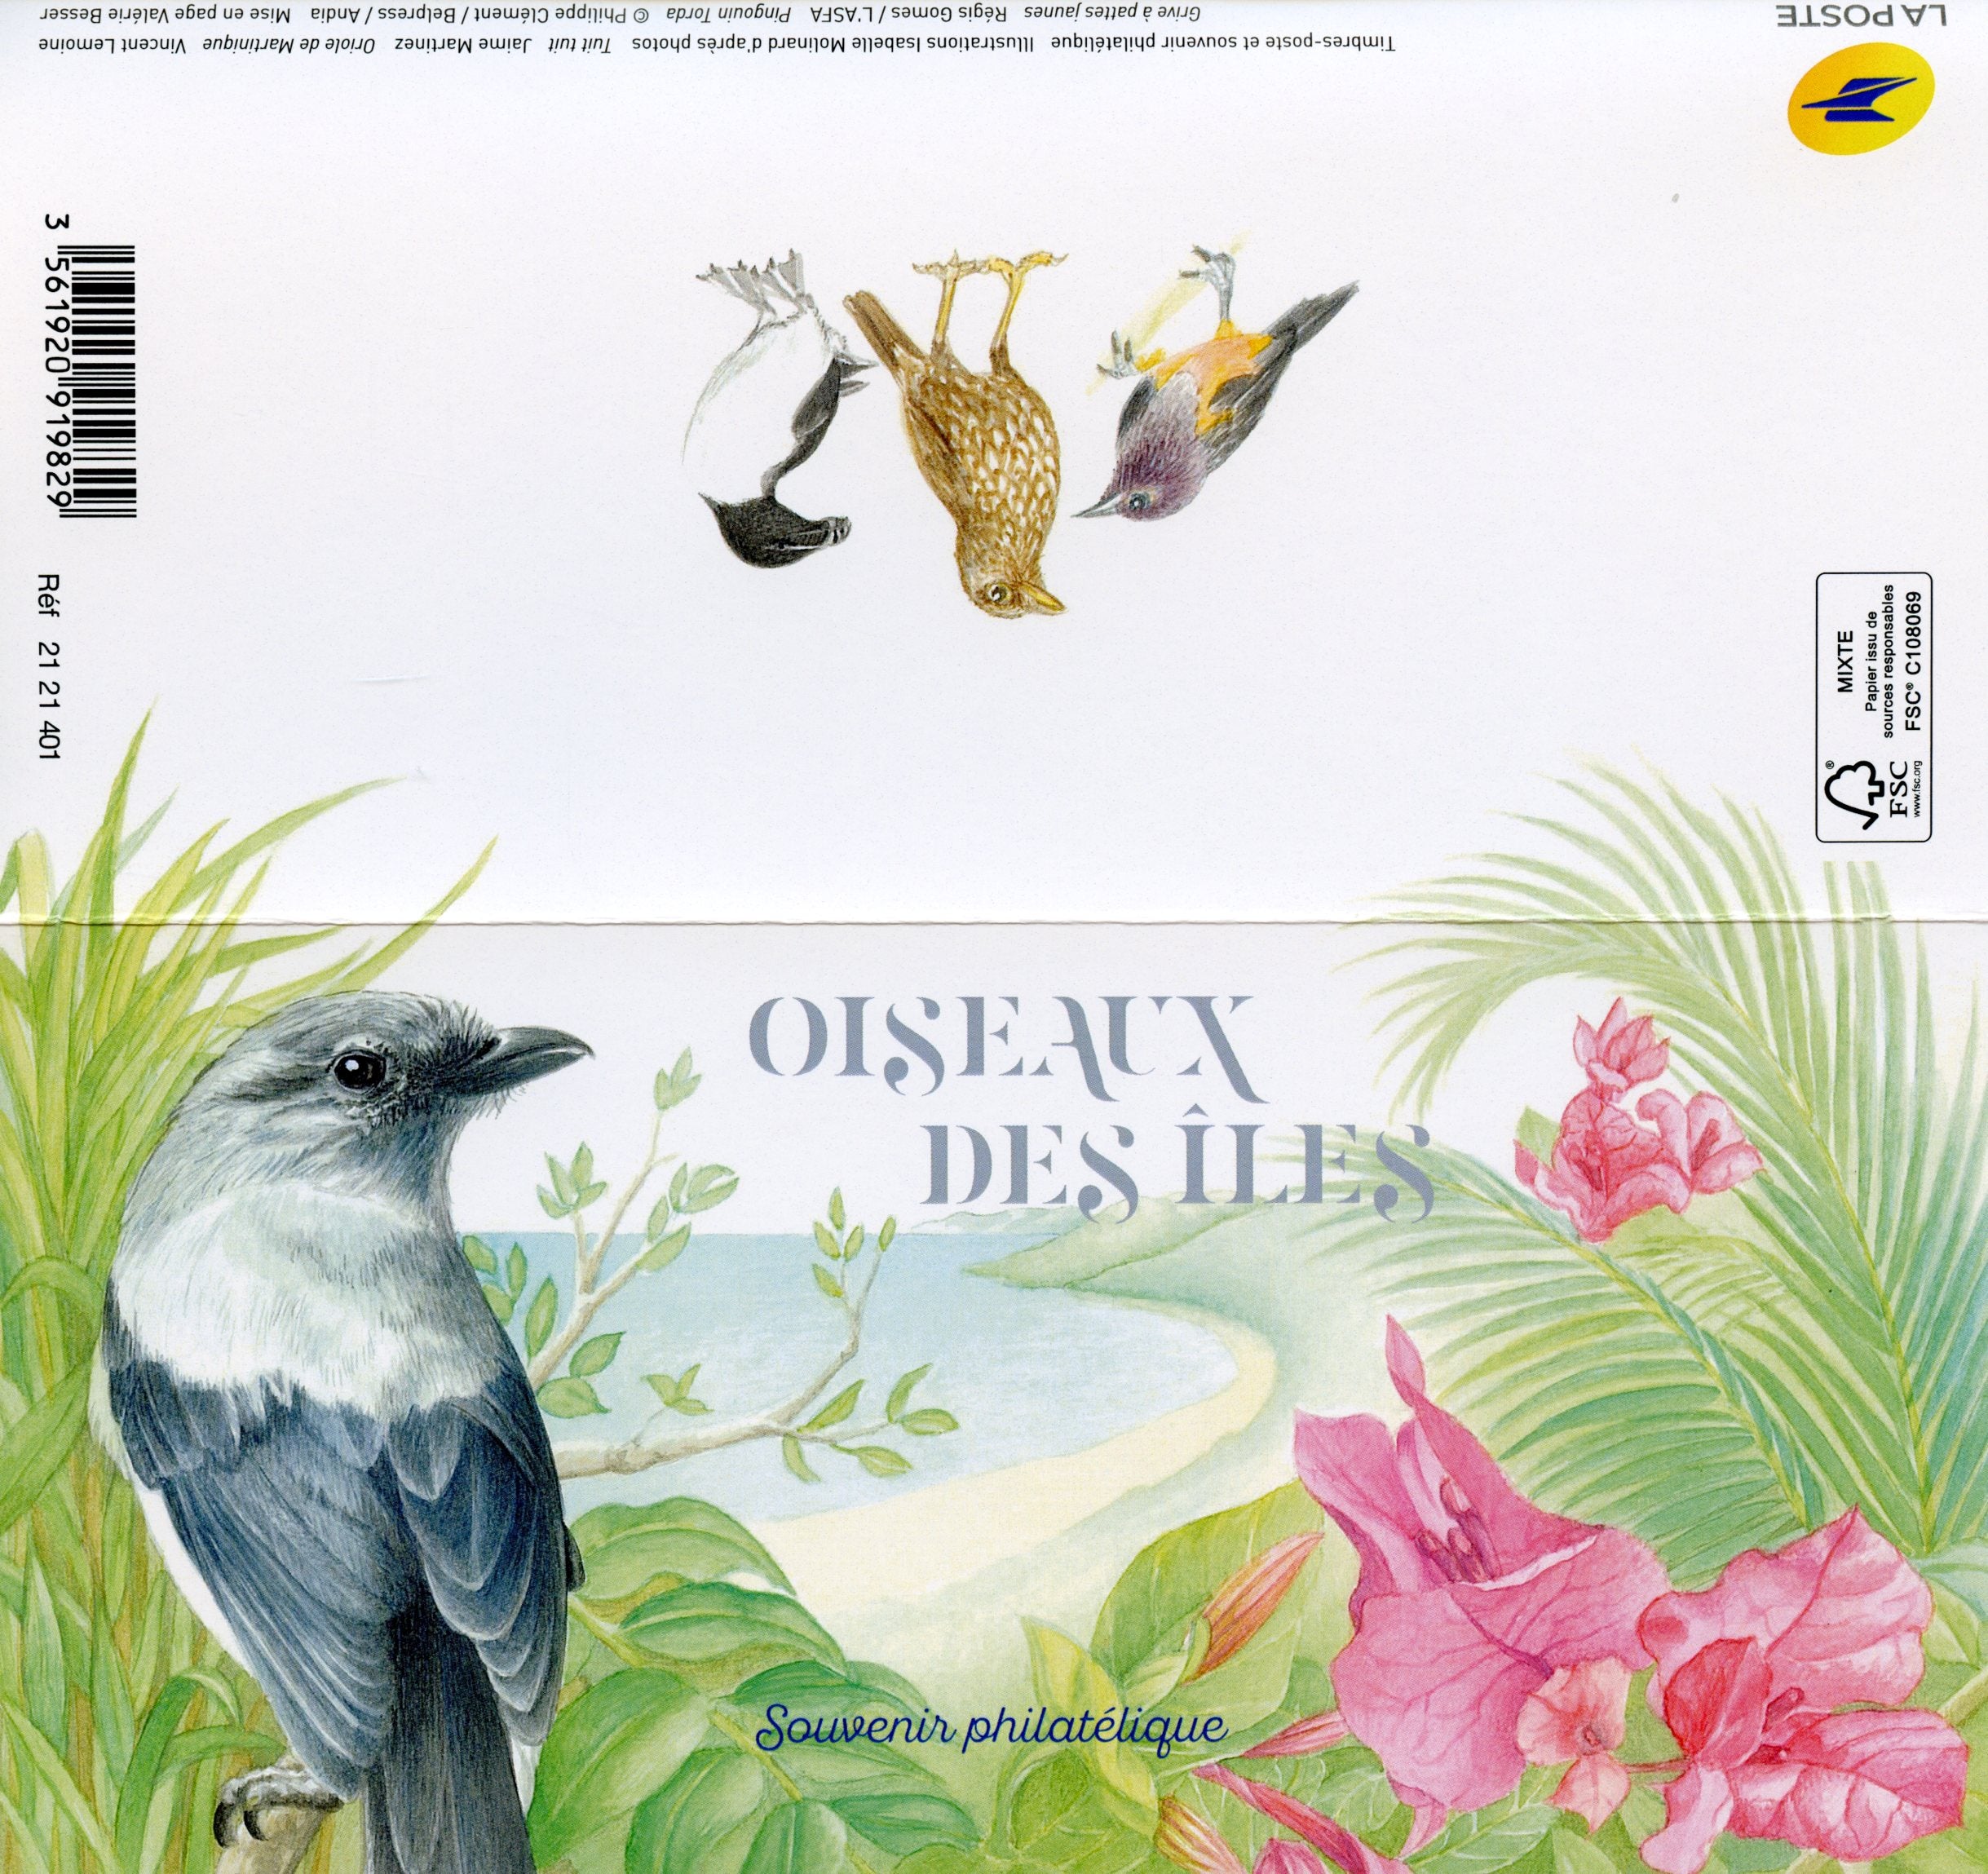 France 2021 MNH Birds on Stamps Razorbill Birds of Islands Penguins 2x 2v M/S Philatelic Souvenir